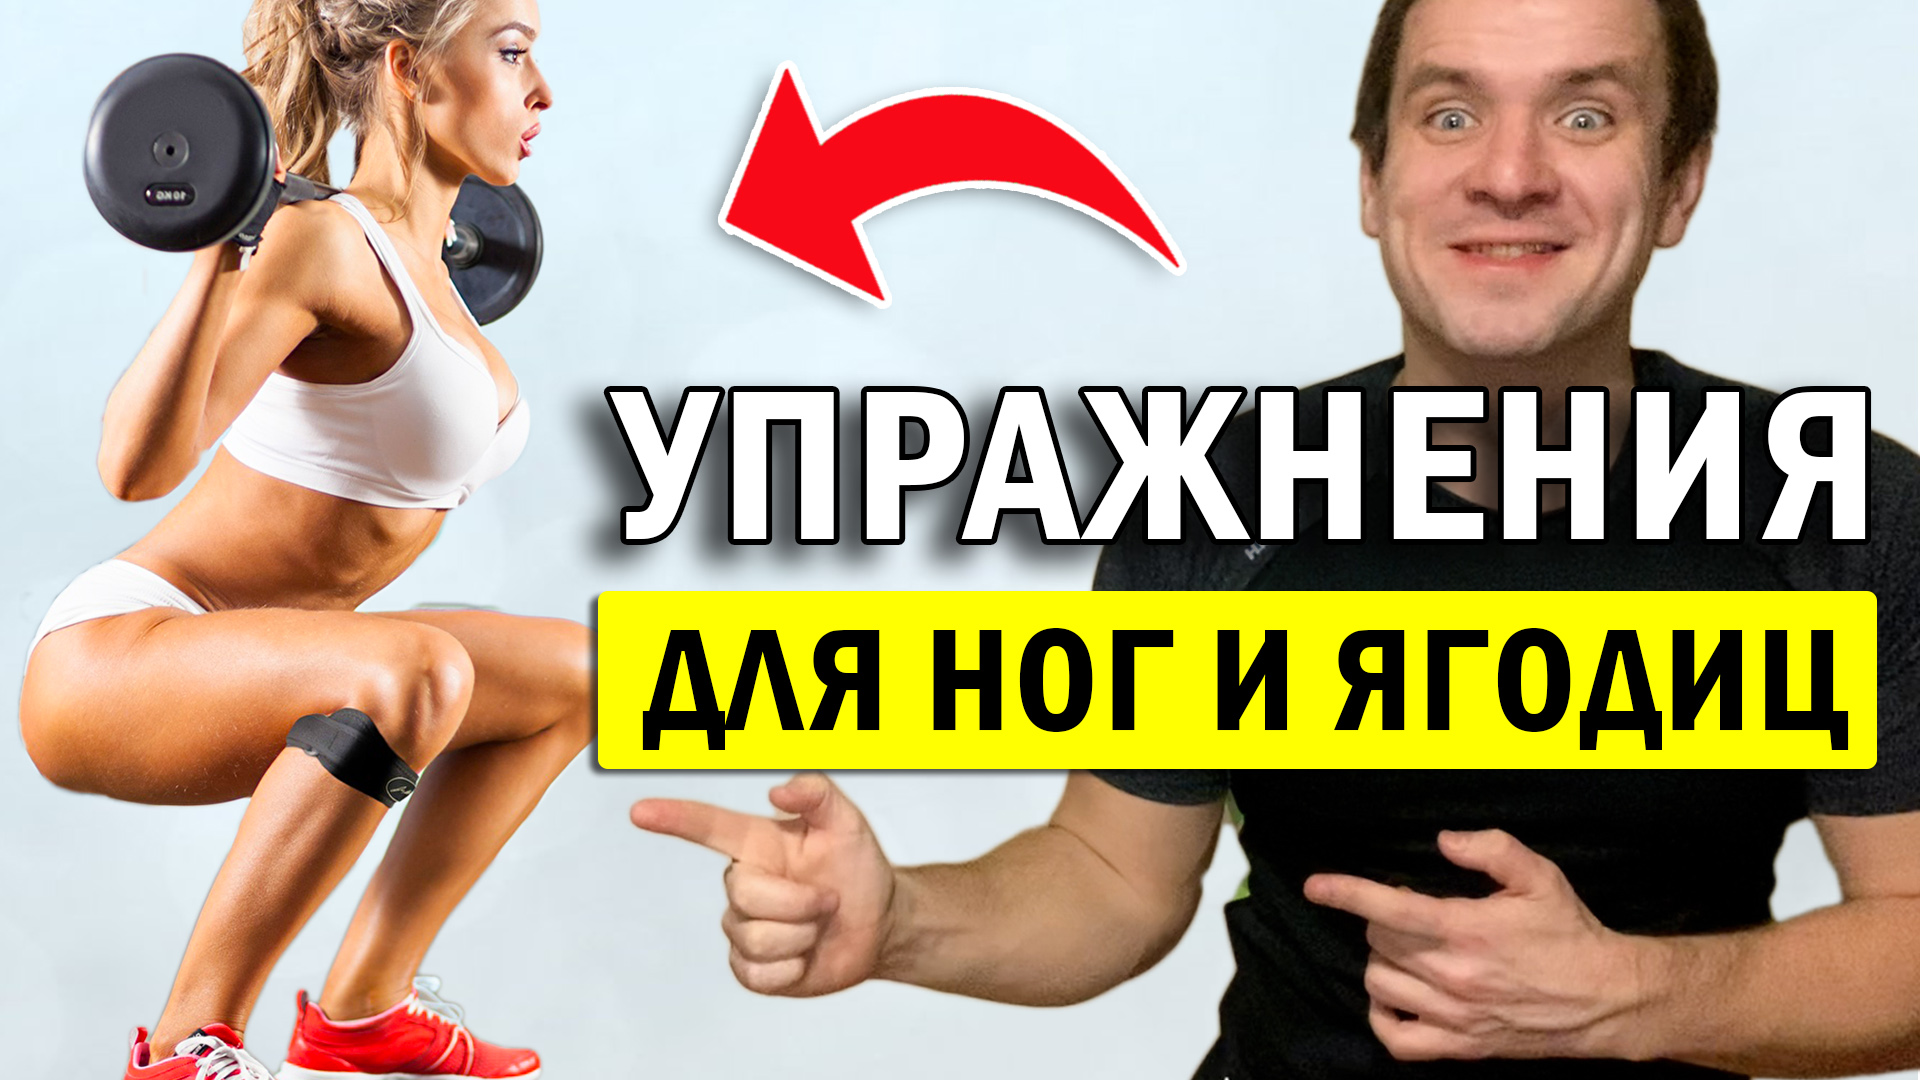 trenirovki mini band Топ 20 ВИДЕО с фитнес резинкой для всего тела 2019